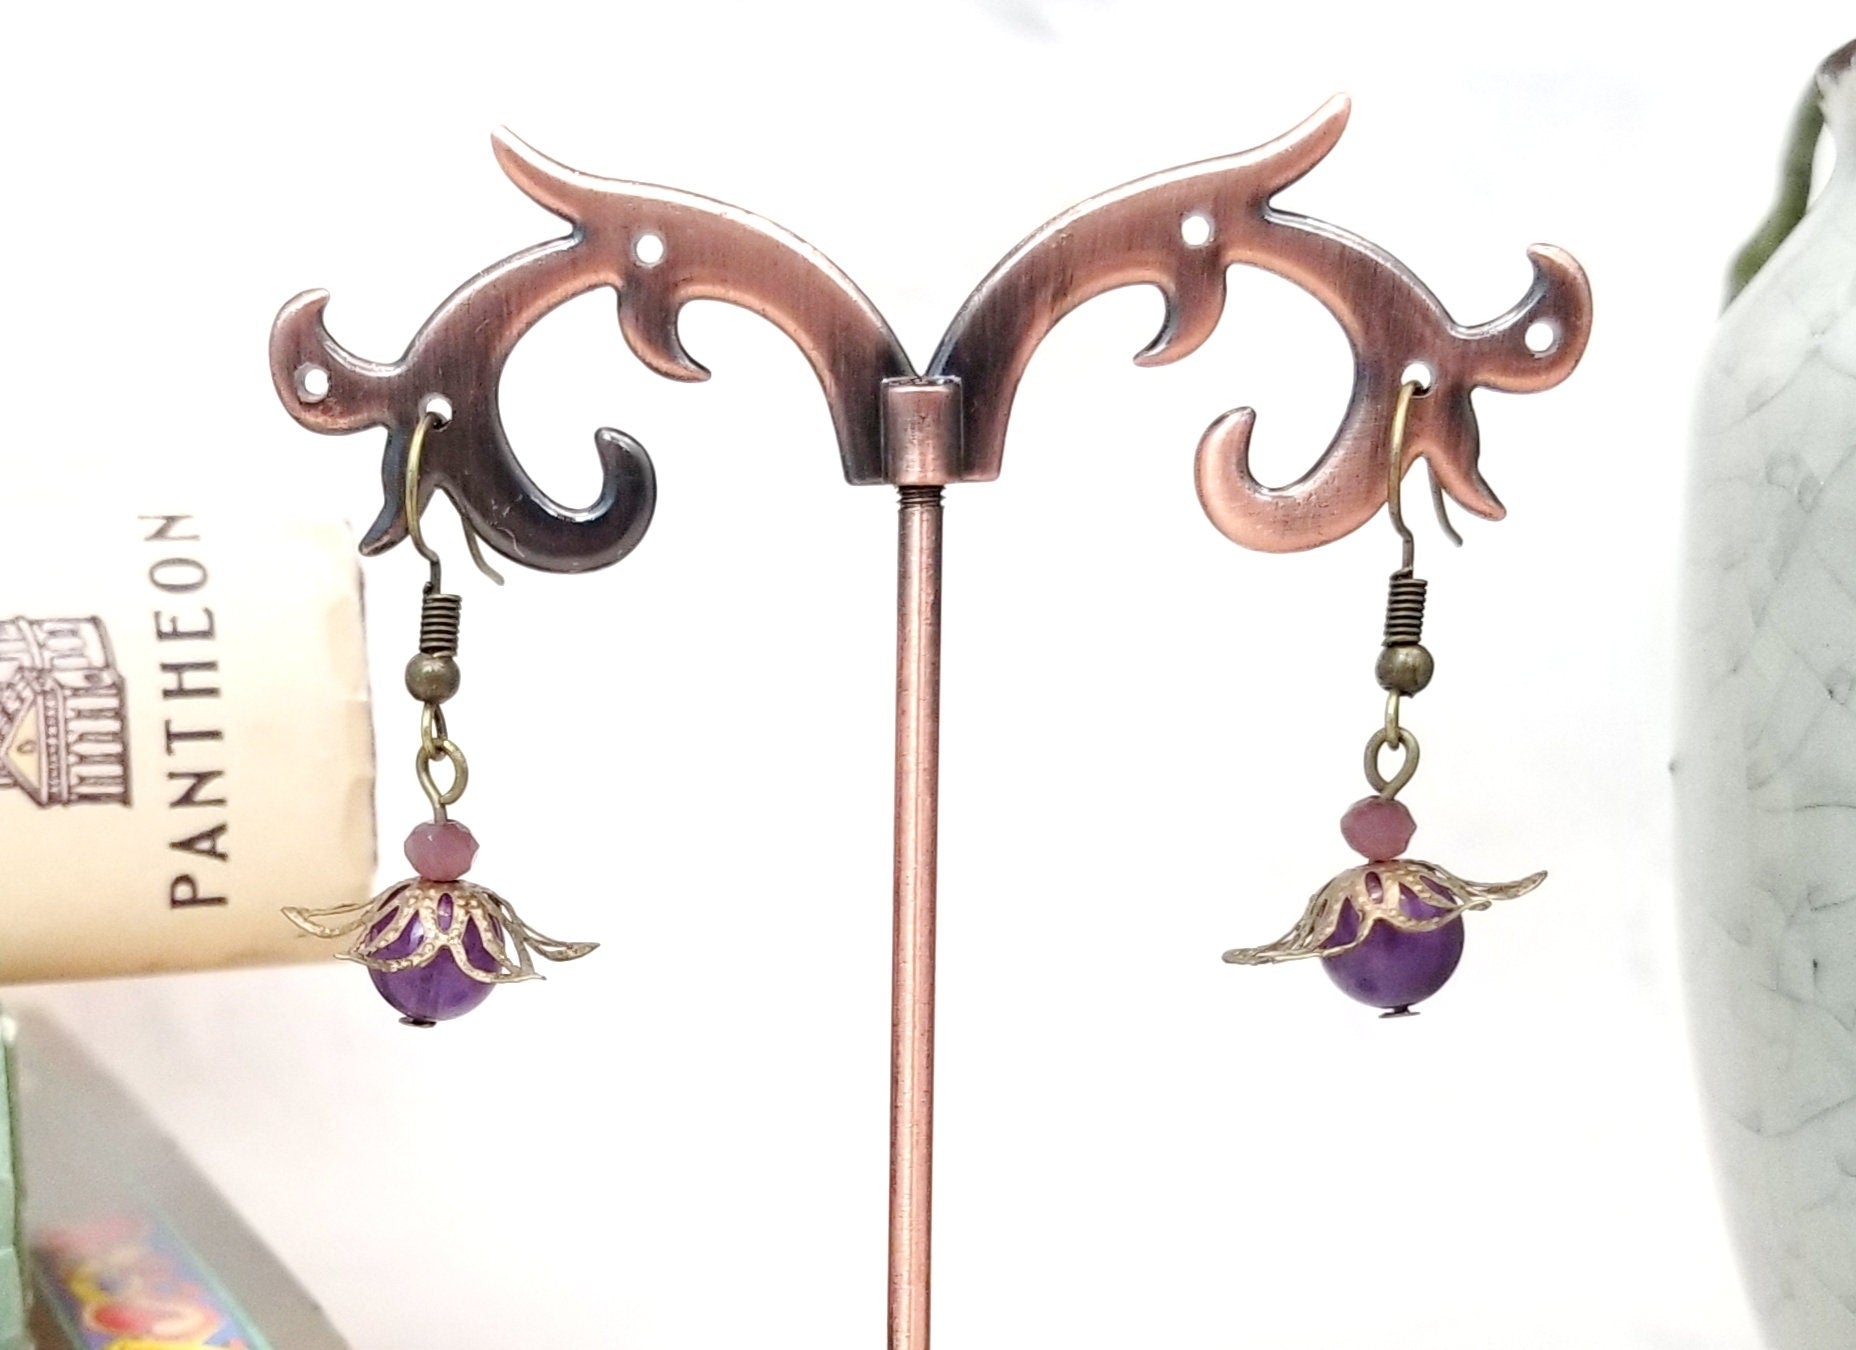 Star Flower Earrings in Purple, Wedding, Bridesmaid, Art Nouveau, Belle Époque, Renaissance, Garden, Choice of Closure Types